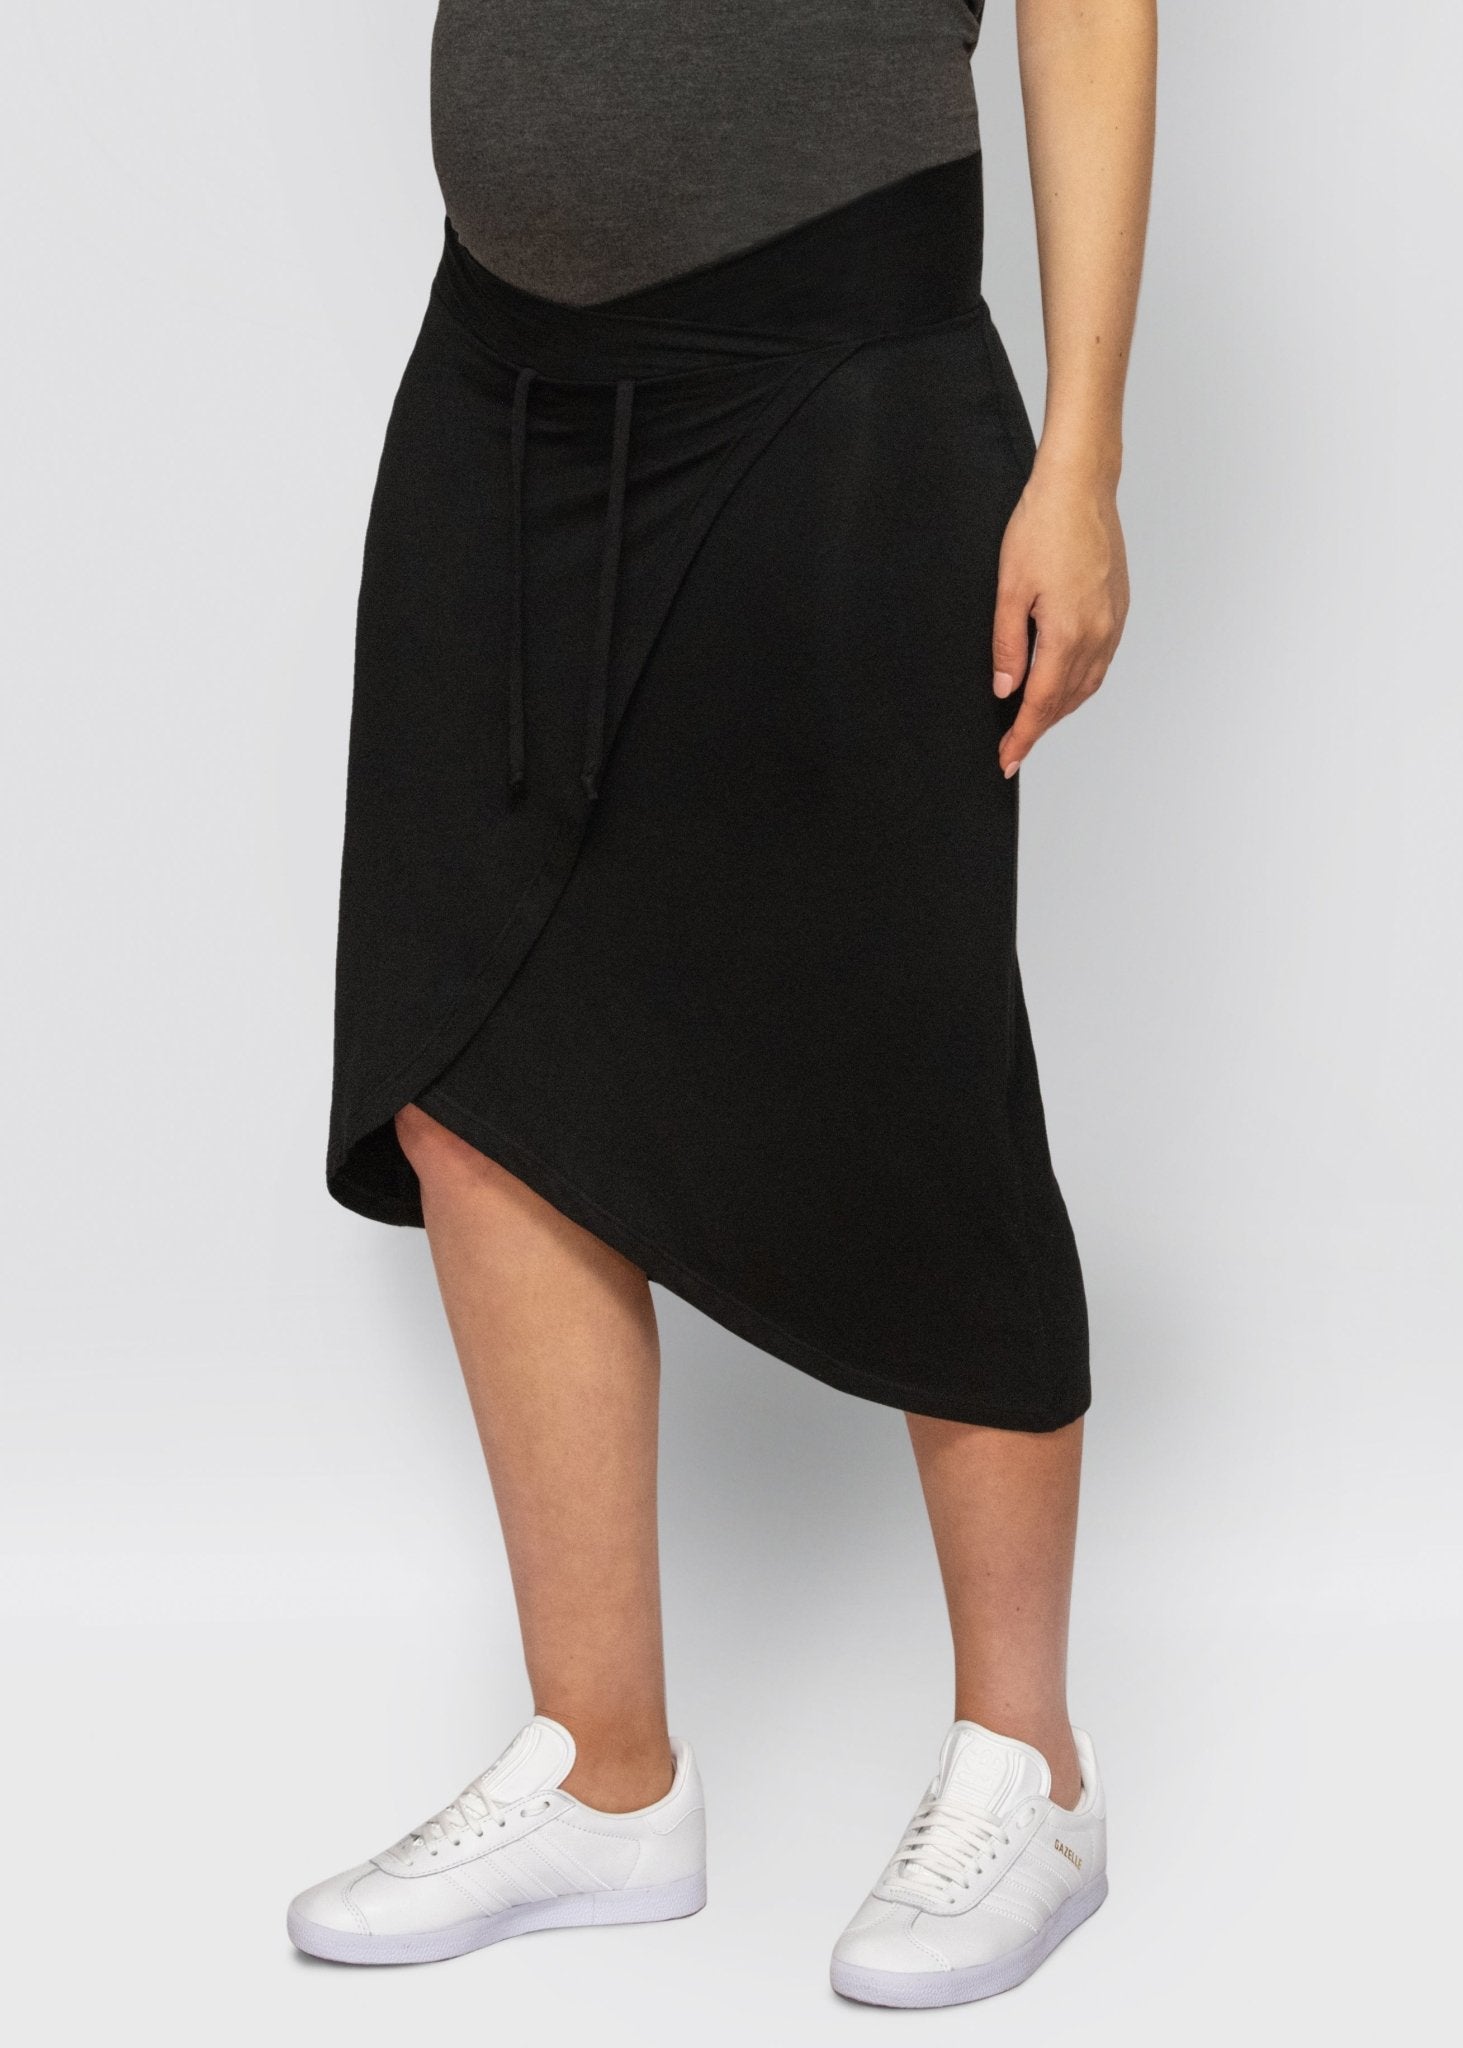 wrap skirt - black-Úton Matenity-stride